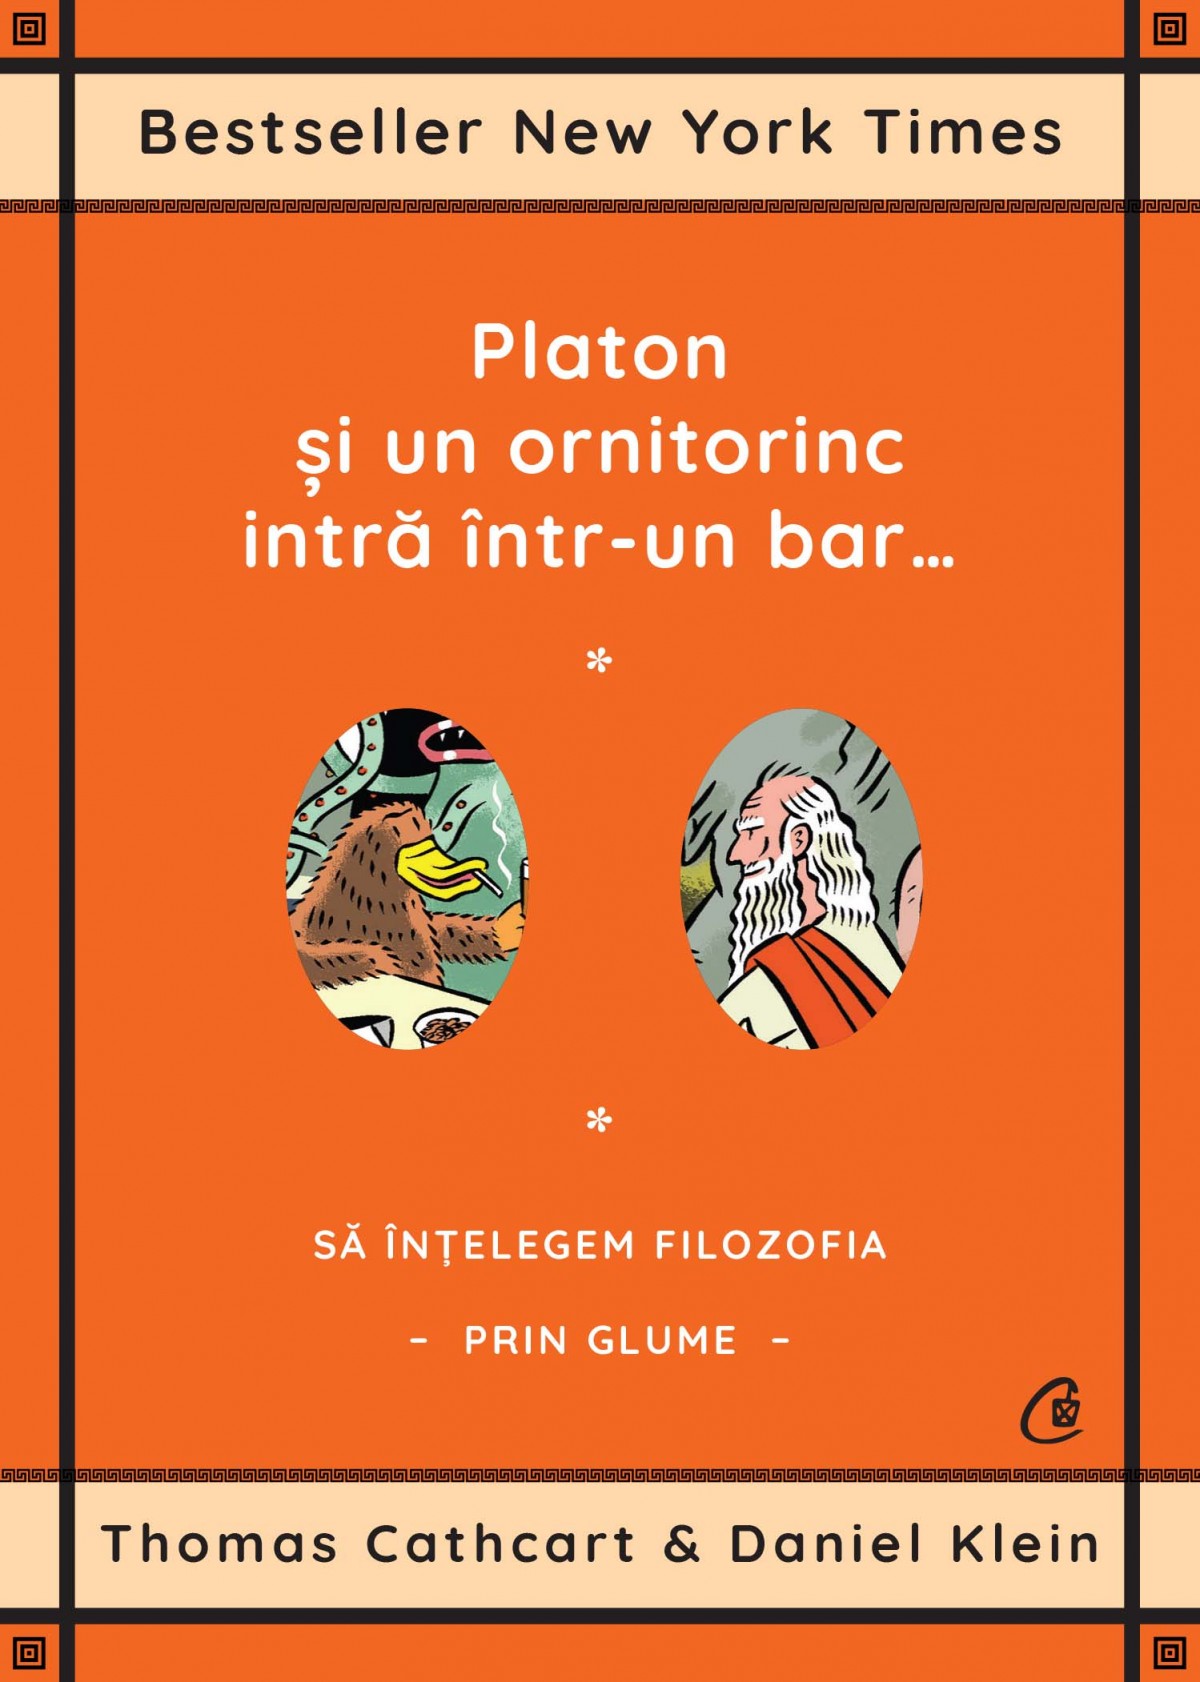 Platon si un ornitorinc intra intr-un bar…